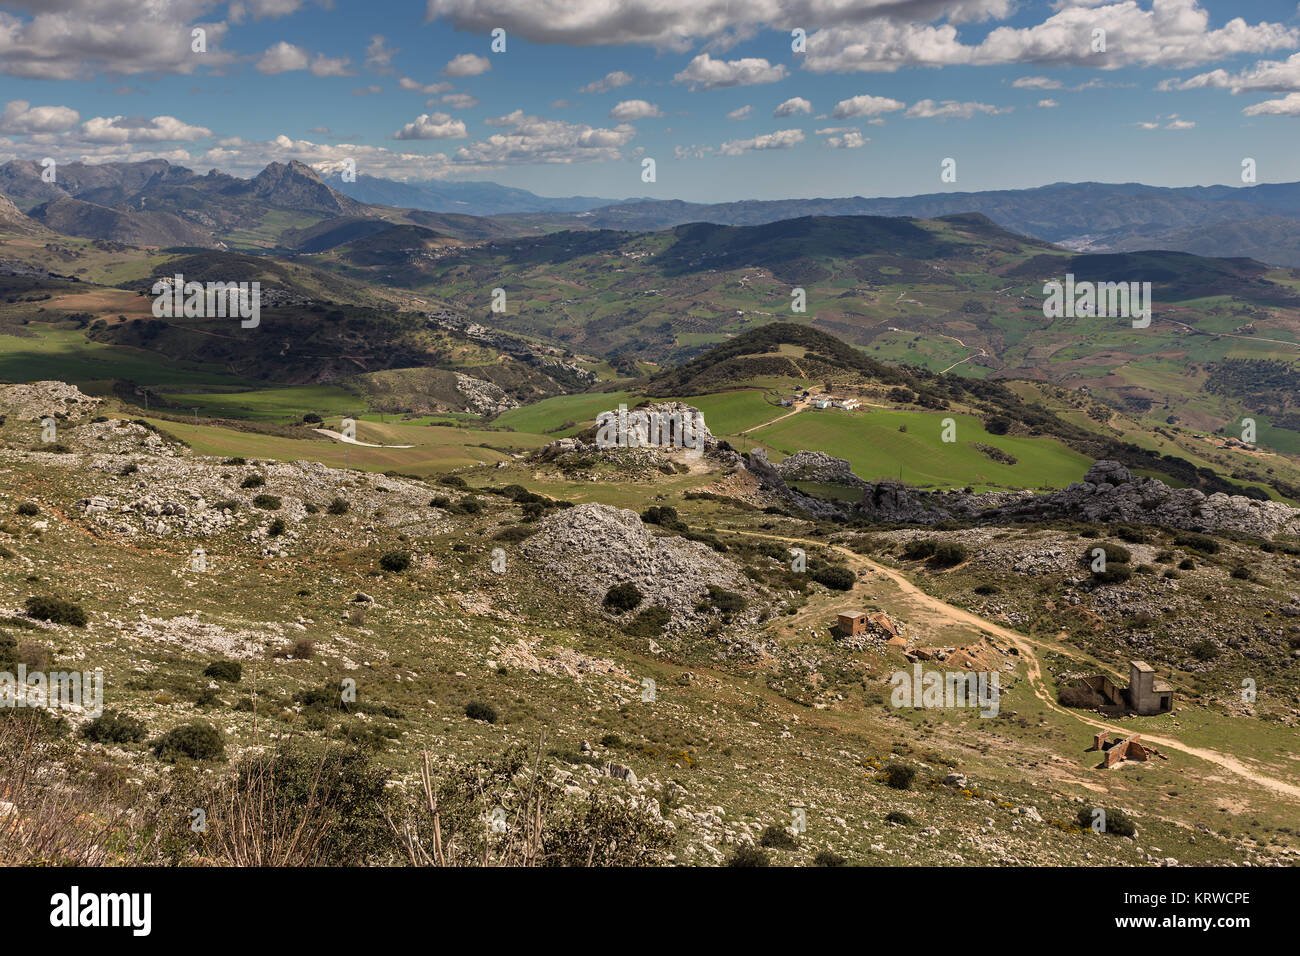 Landscape near Antequera in the province of Malaga. Spain. Stock Photo